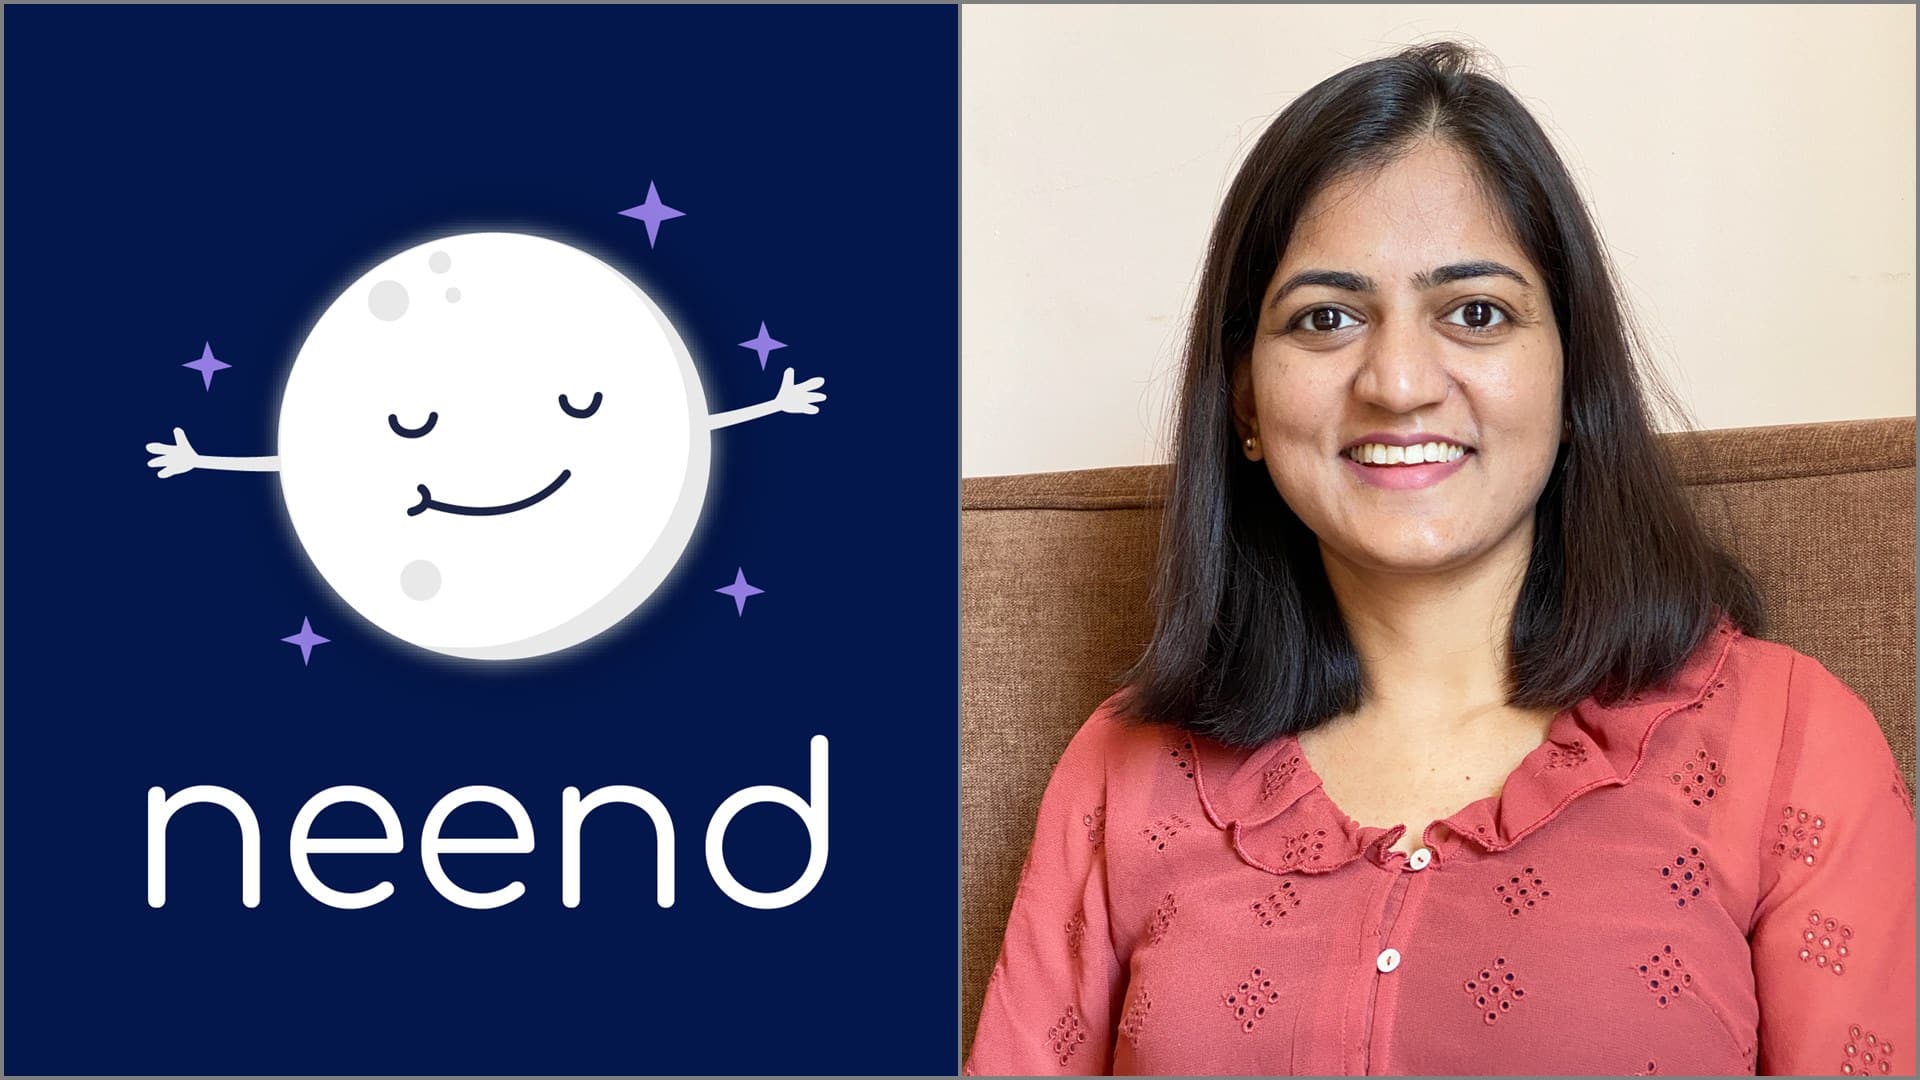 Free sleep app Neend raises $700k in seed round led by Better Capital